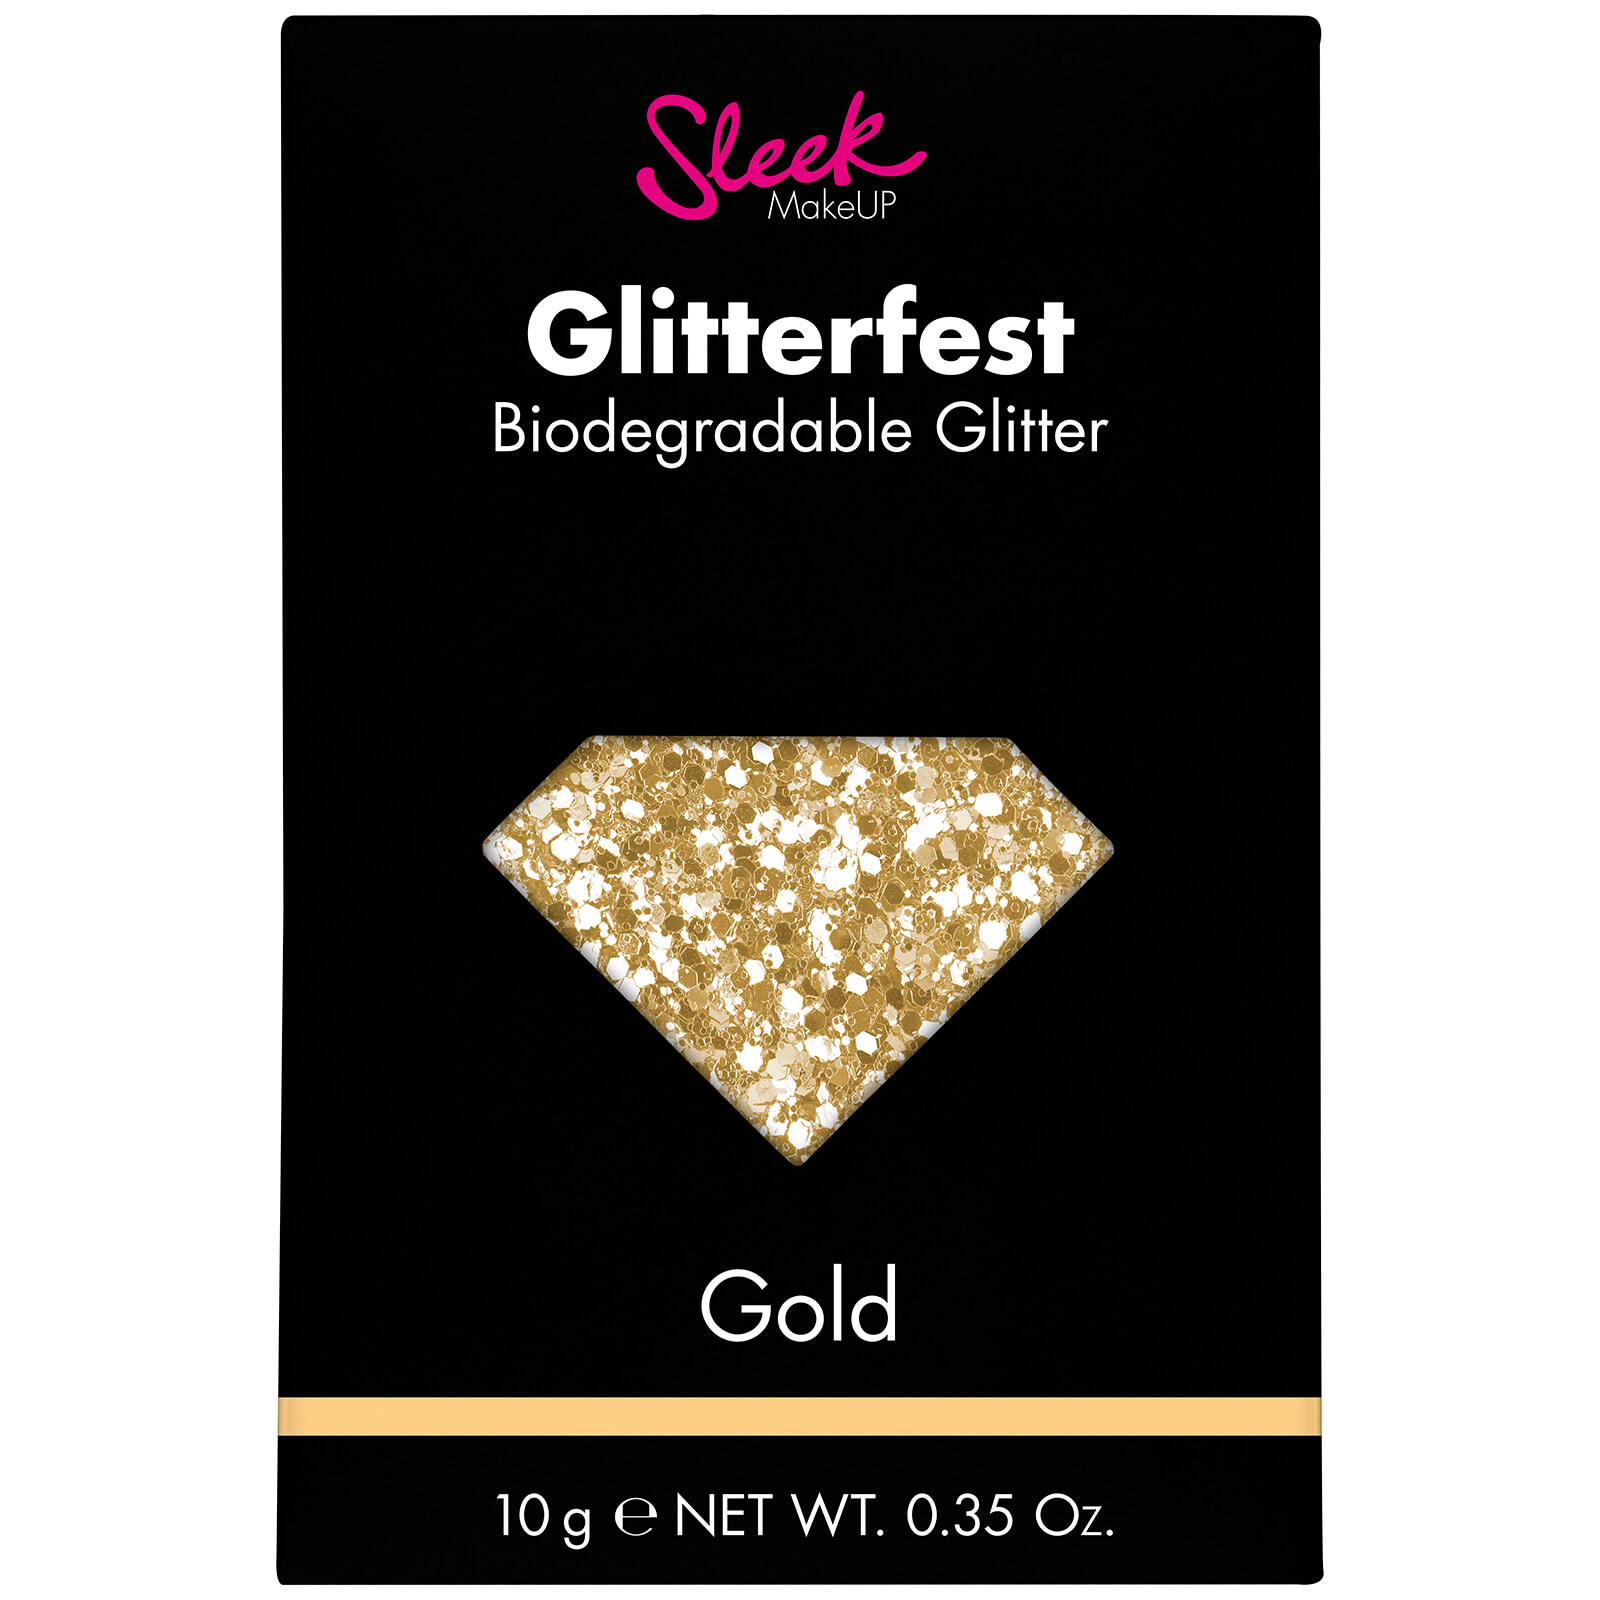 Brillantina biodegradable Glitterfest de Sleek MakeUP - Oro 10 g